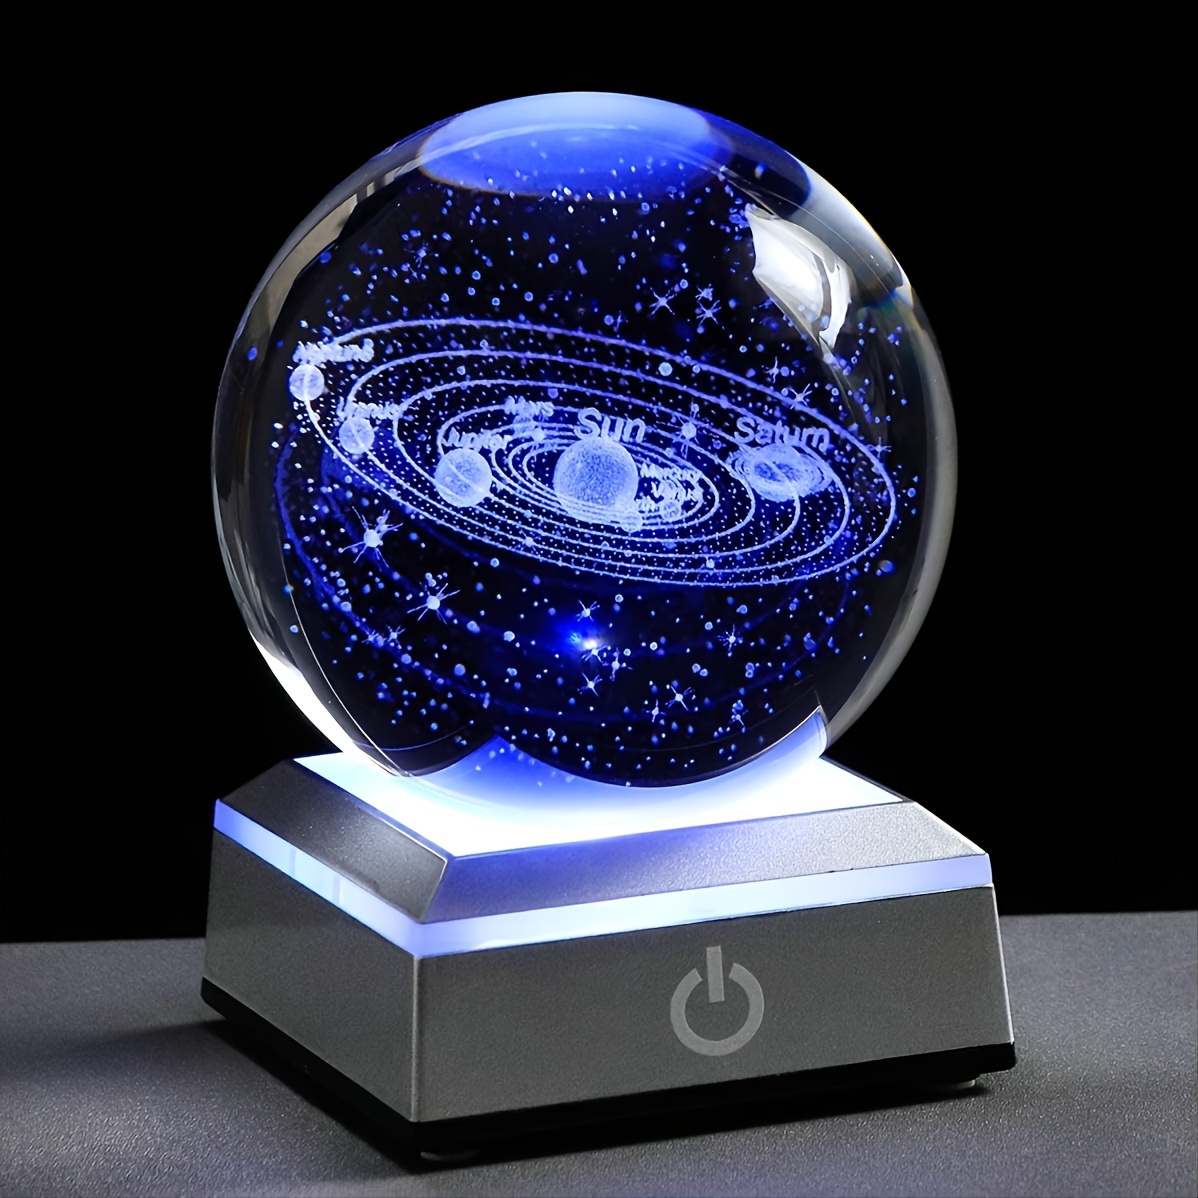 Bola de cristal decorativa VOSAREA modelo cósmico esfera de vidro gravada  miniatura modelo esfera solar 3D enfeite esfera de cristal